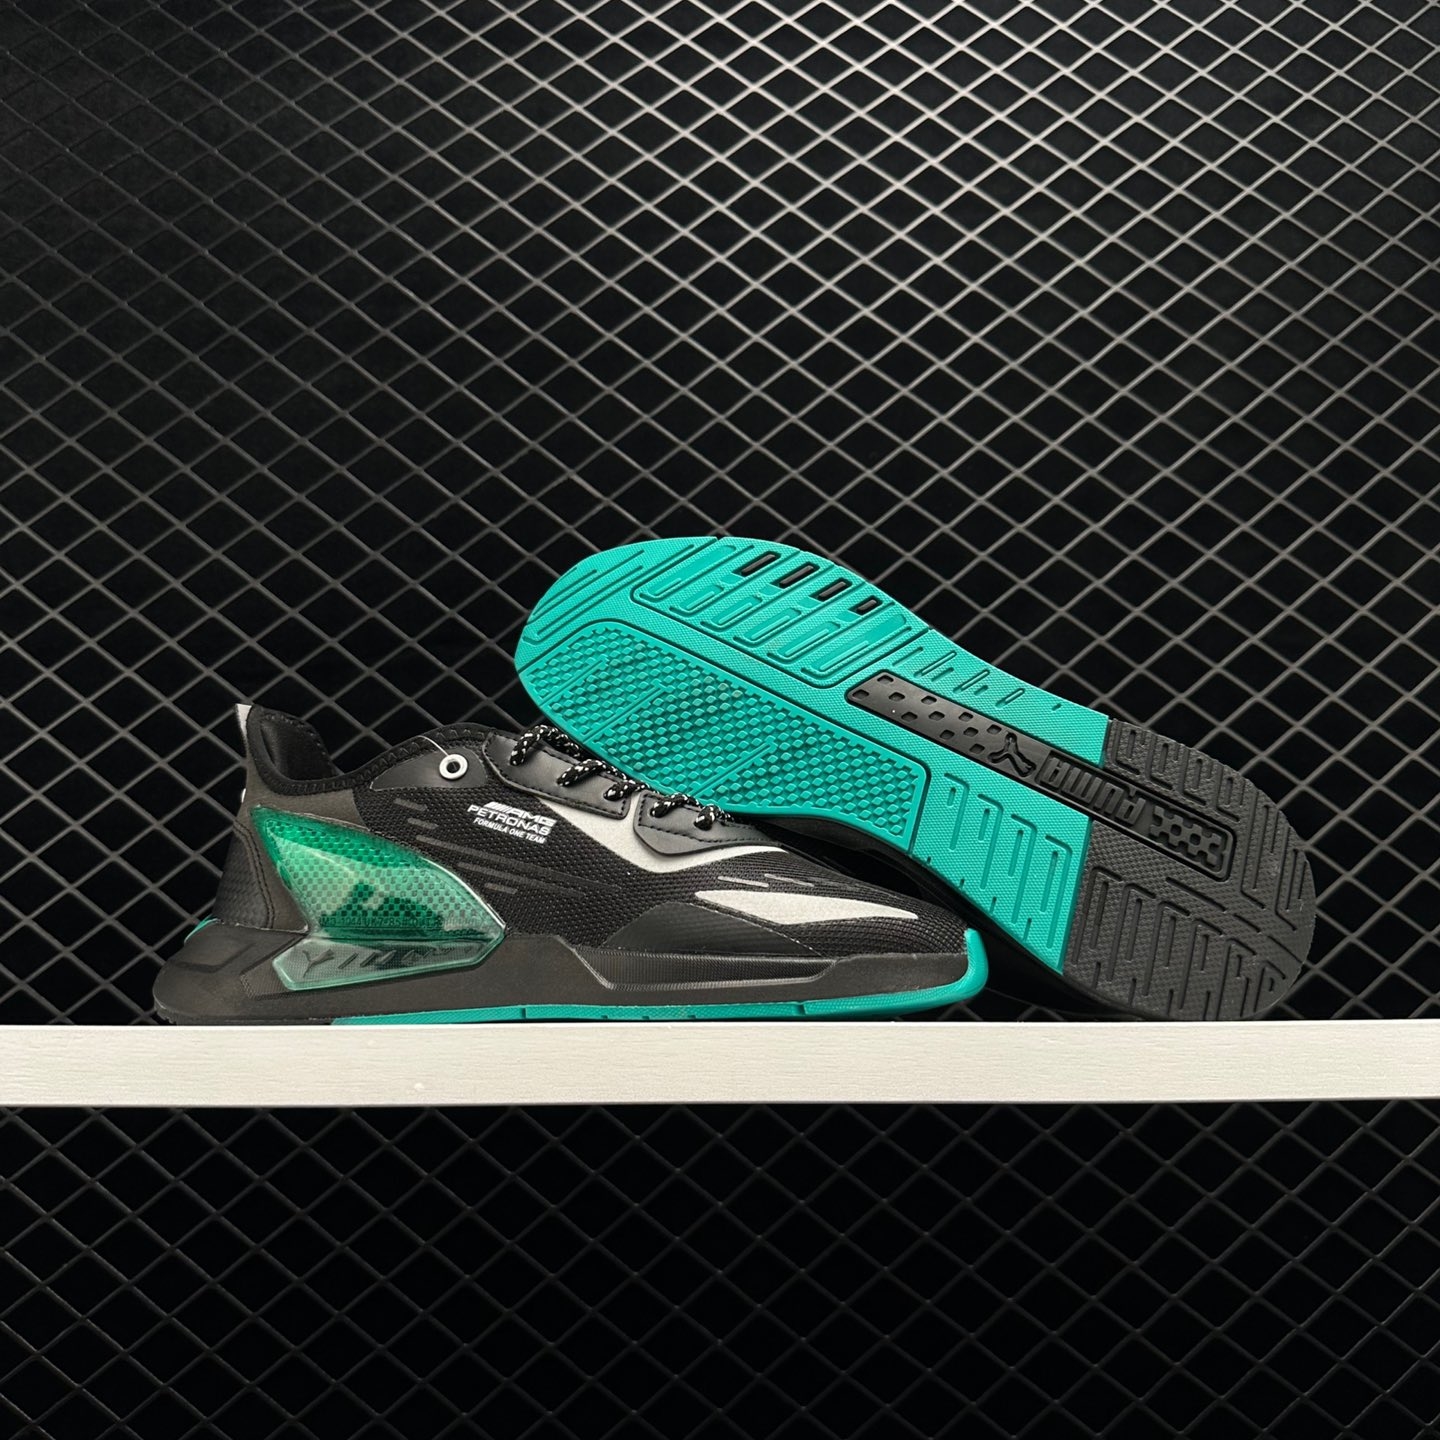 Puma Mercedes-AMG Petronas F1 x ZenonSpeed 'Black Spectra Green' 307042 03 - High-performance Racing Shoes